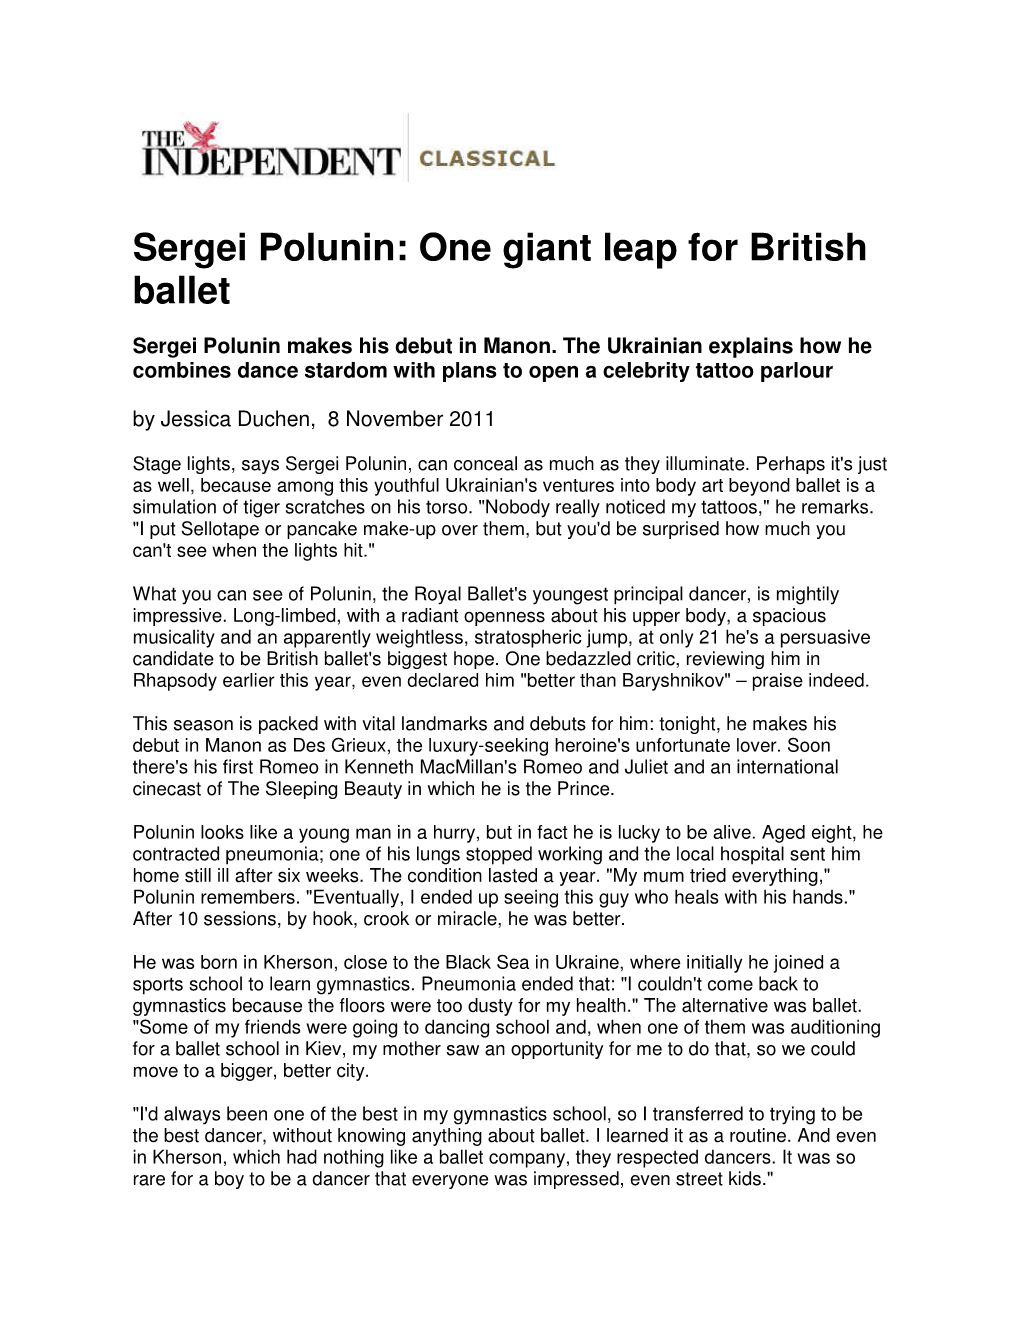 Sergei Polunin: One Giant Leap for British Ballet